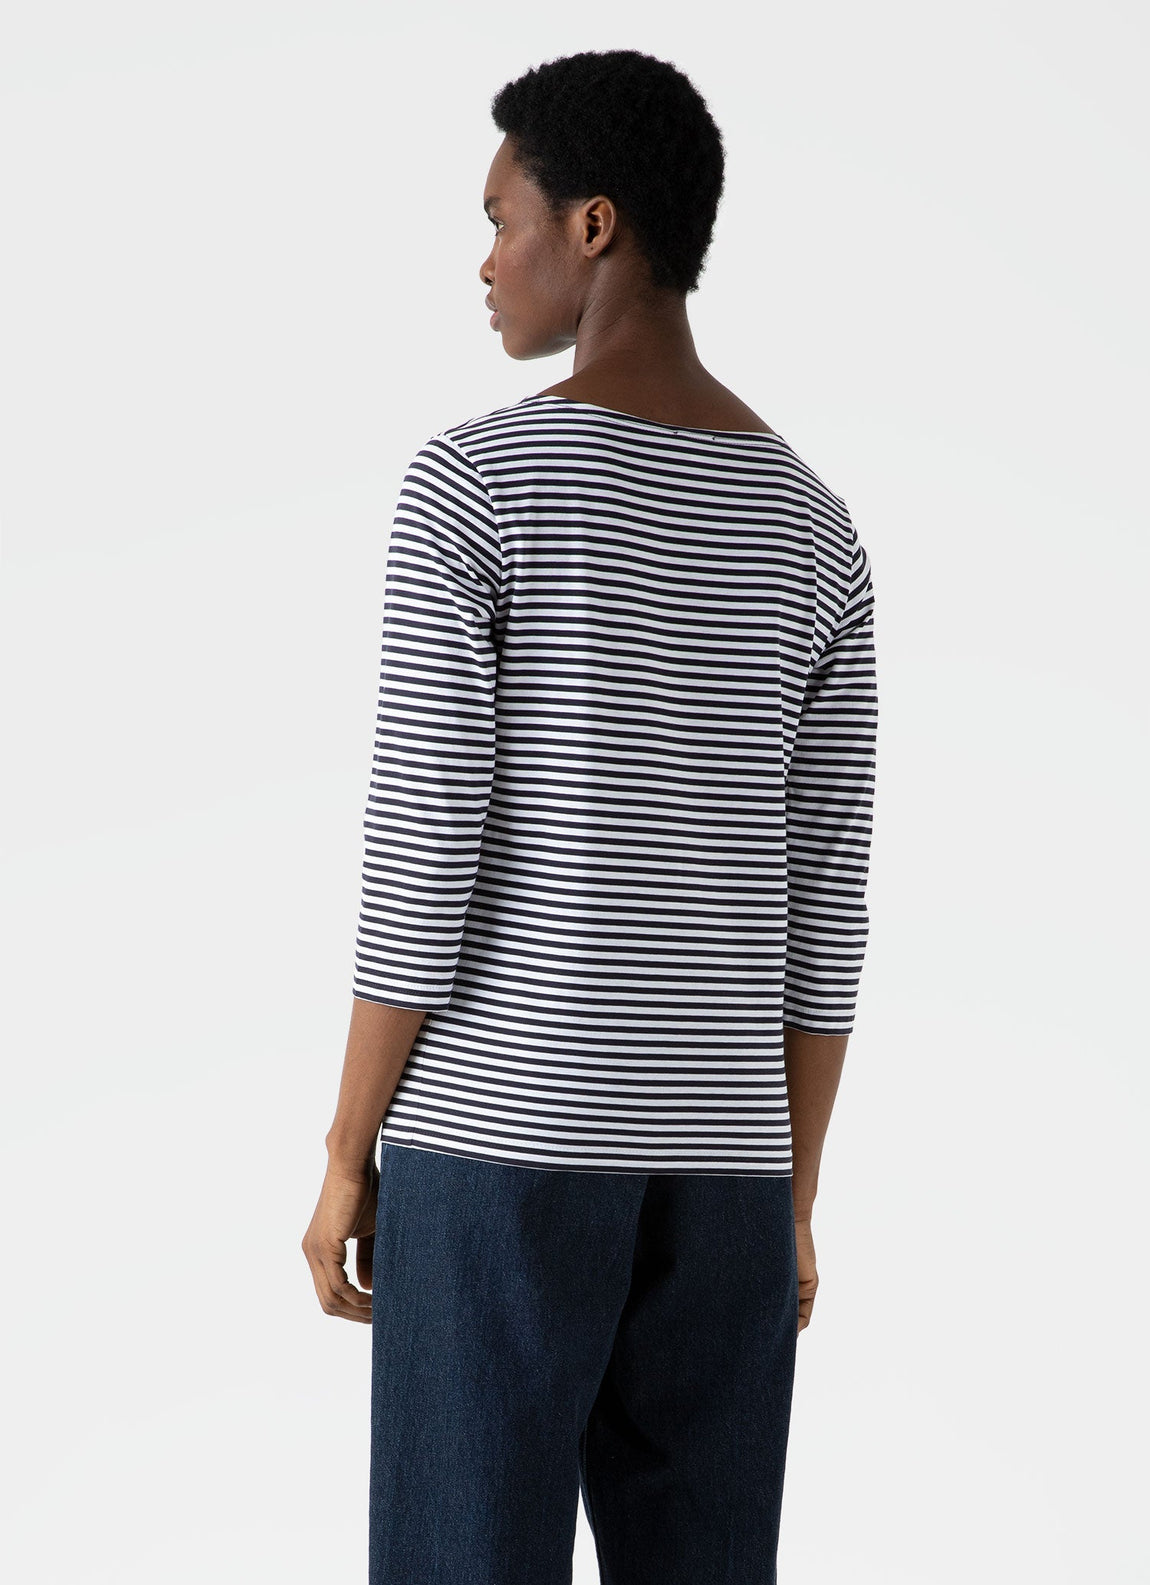 Women's Boat Neck T-shirt in White/Navy English Stripe